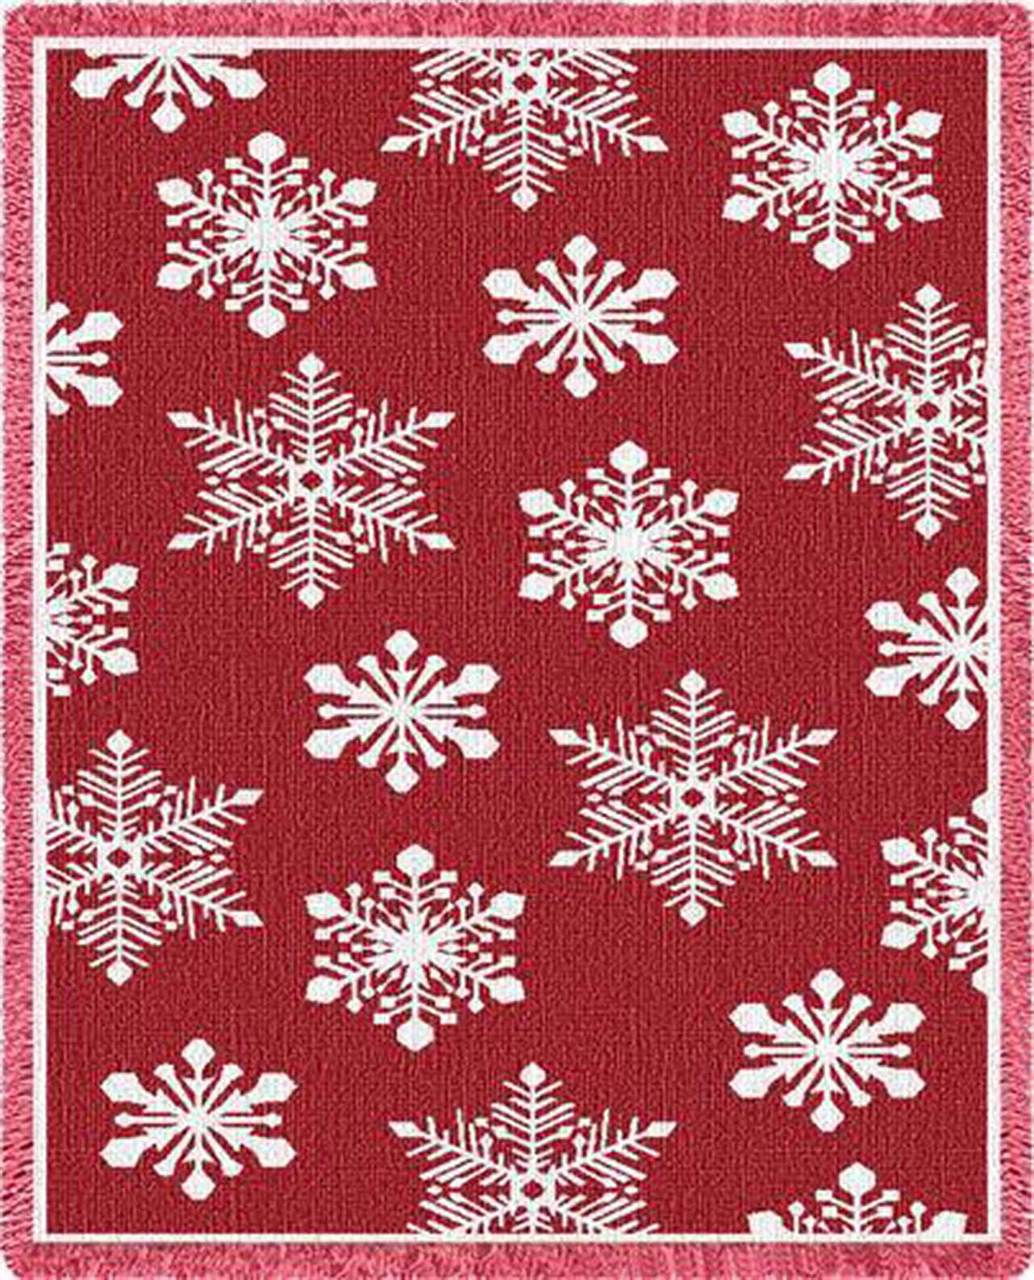 Snowflakes Red | Christmas Afghan | 70 x 50 | Art & Home